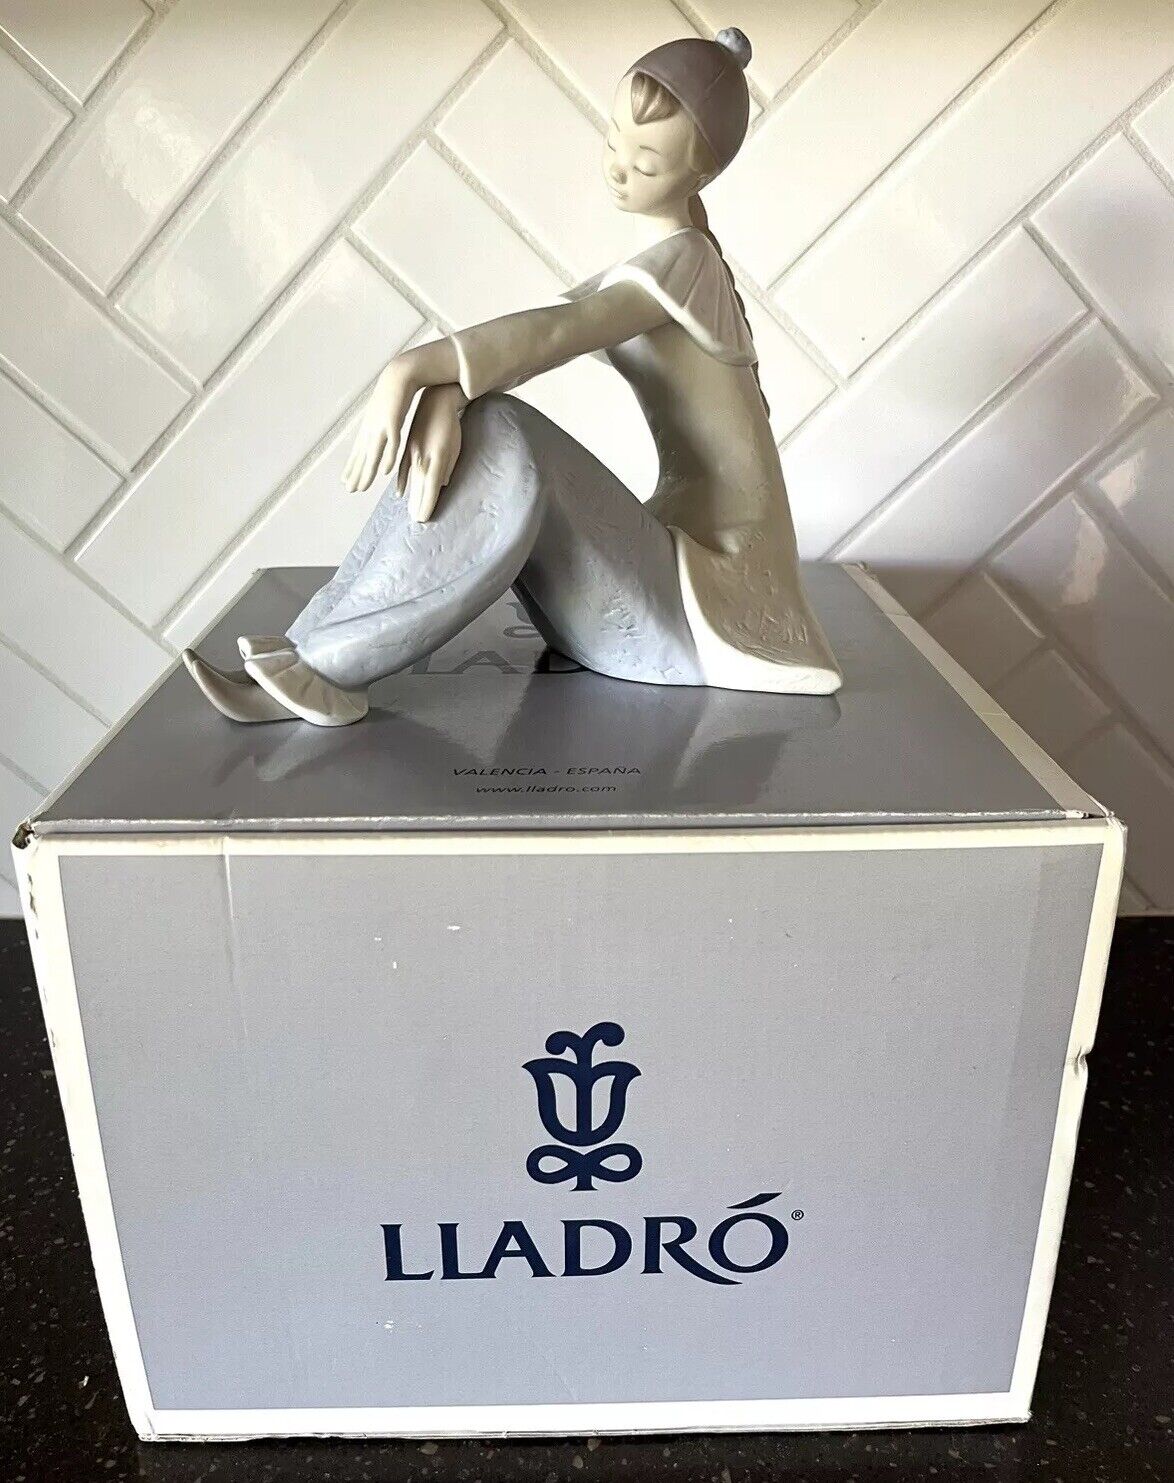 NEW IN BOX Lladro 18155 Reflective Pierrot Girl Sitting Porcelain Figurine 2004